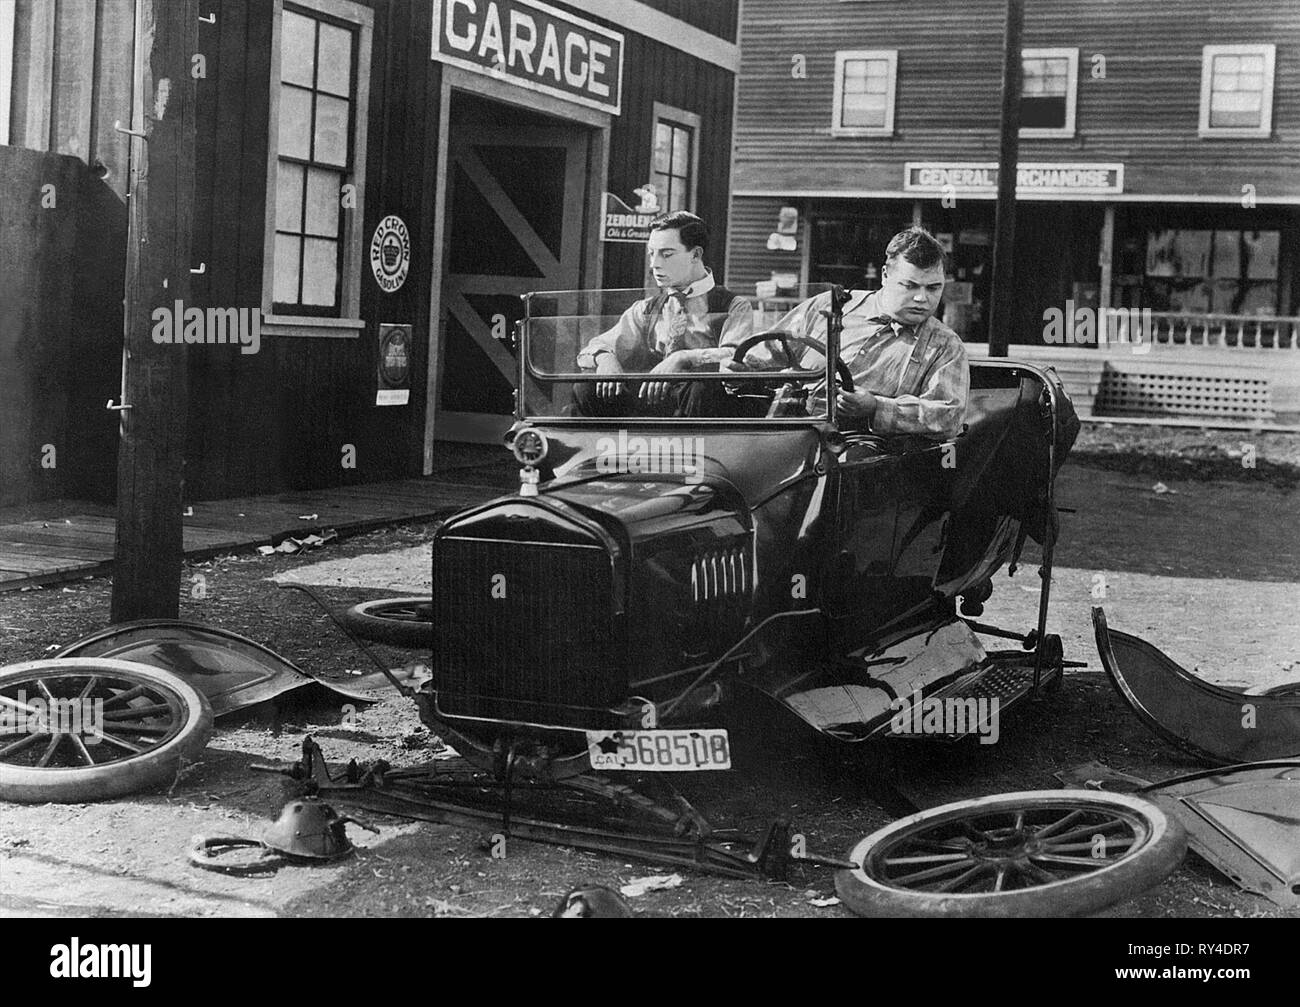 KEATON,ARBUCKLE, THE GARAGE, 1920 Stock Photo